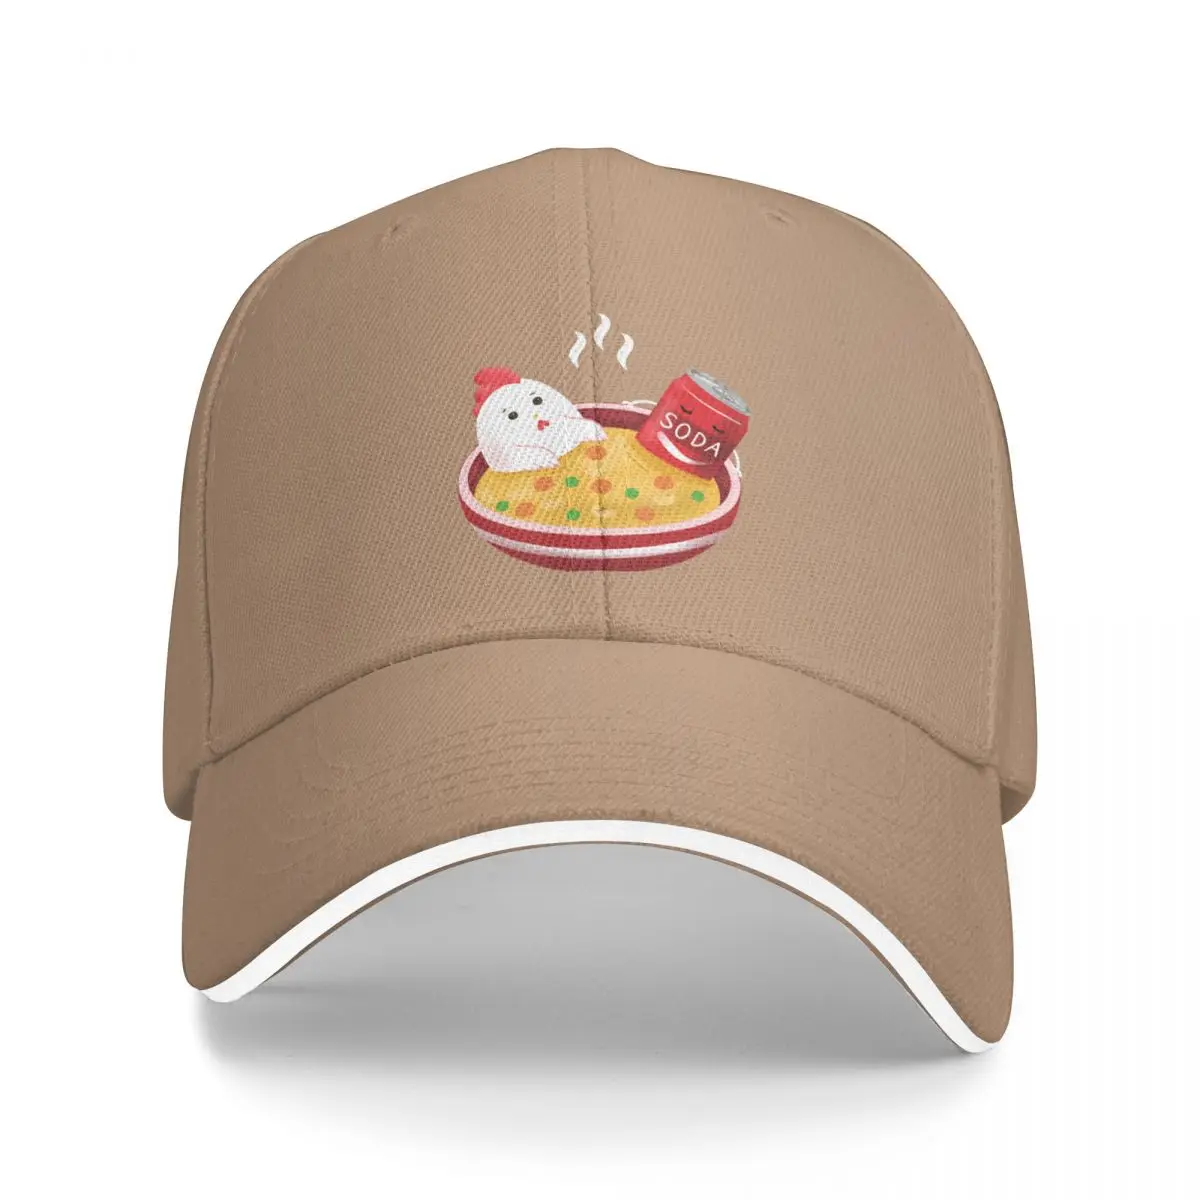 

love Chicken noodle soup with a soda on the side illustration Bucket Hat Baseball Cap hat fur hat hat women Men's